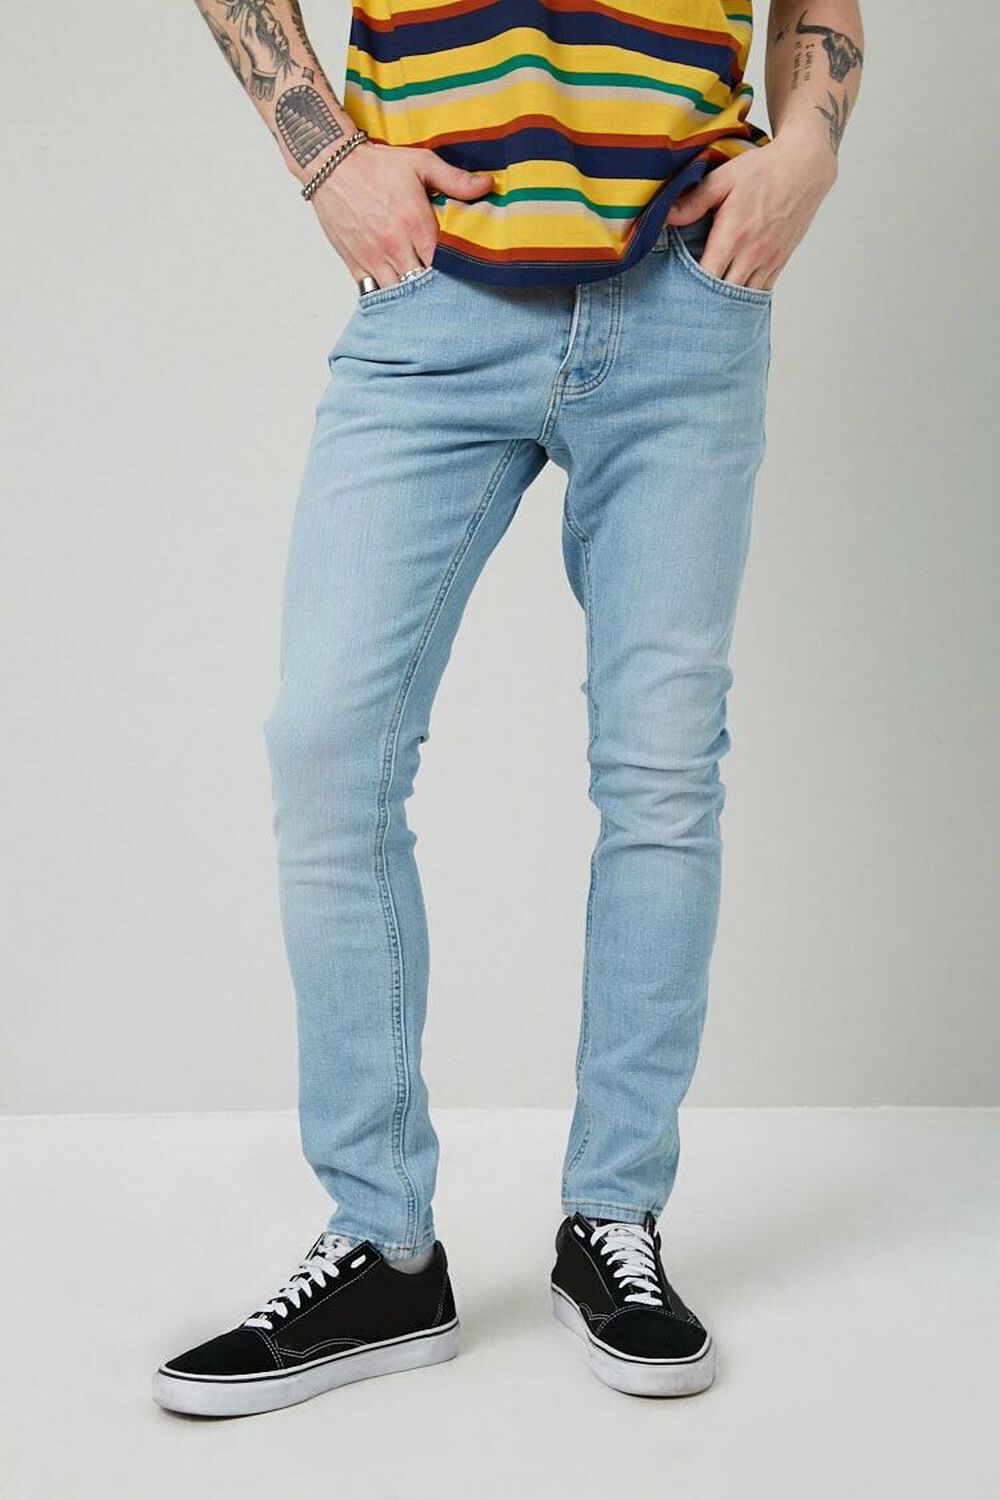 Men Skinny Jeans, Fashion Solid Low-Waist Slim-Fit Denim Pants Streetwear,  Light Blue/Black